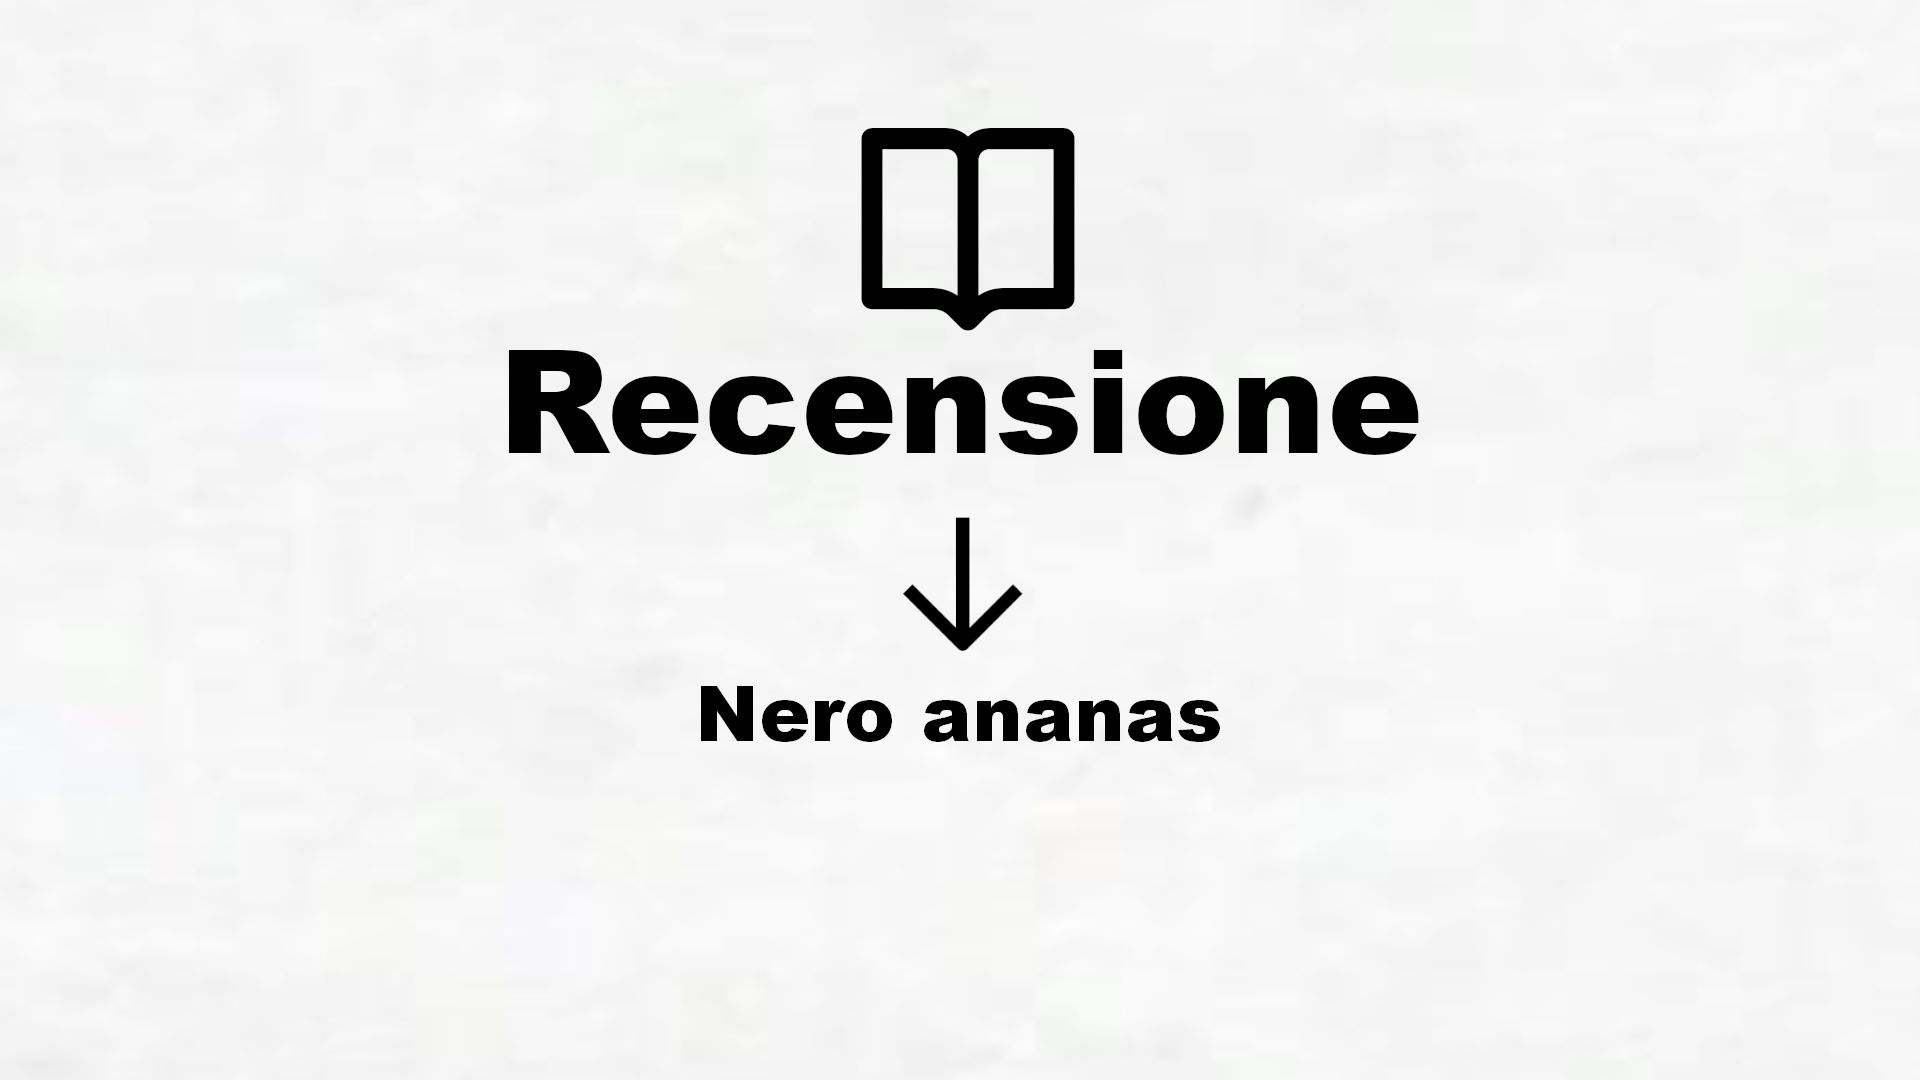 Nero ananas – Recensione Libro